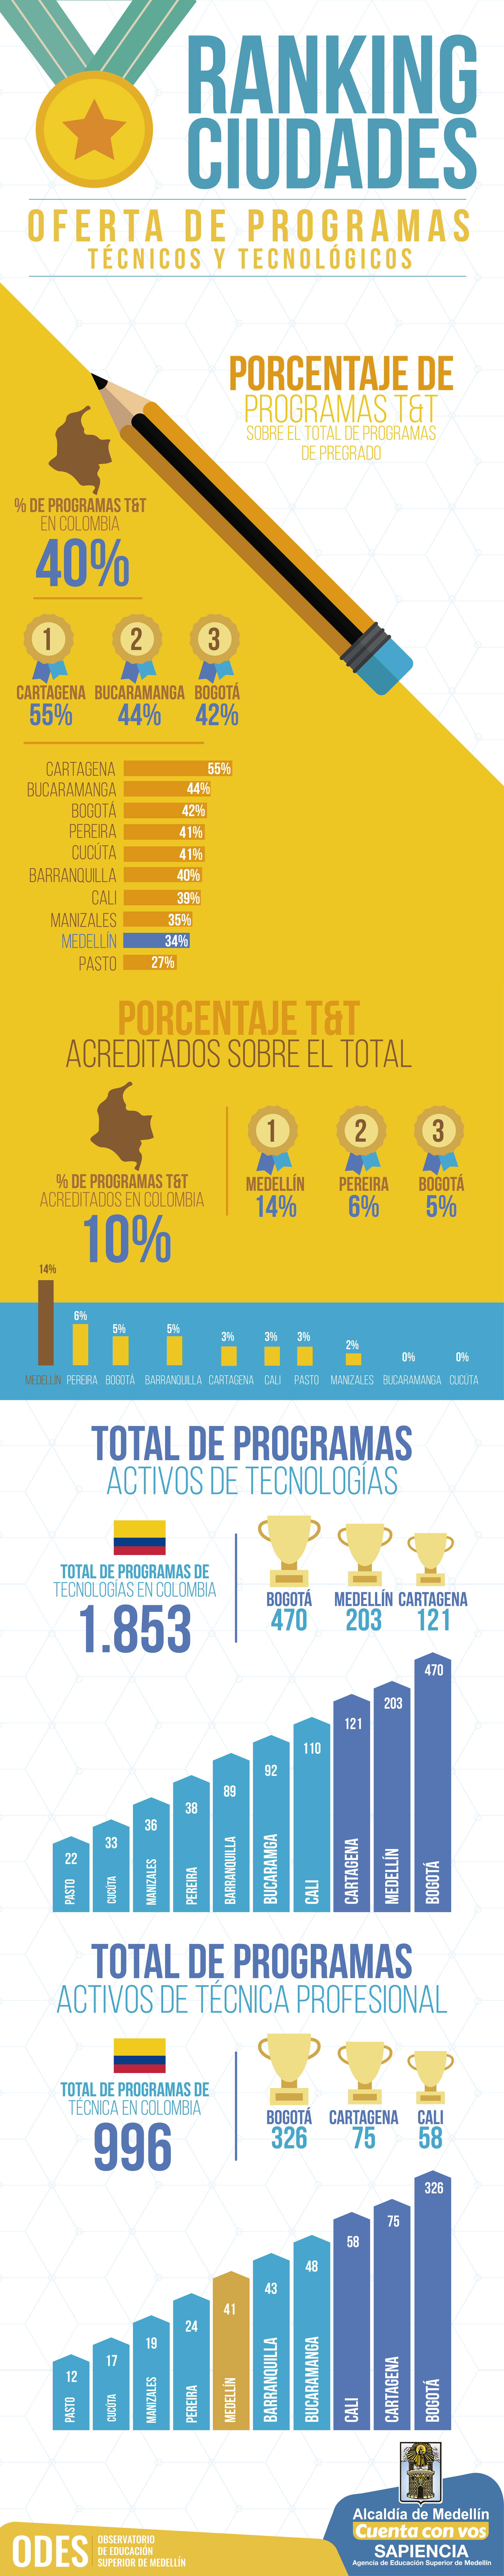 Infografia_Ranquin_ciudades_oferta_programas_Tecnicos_yTecnologicos_ODES-01